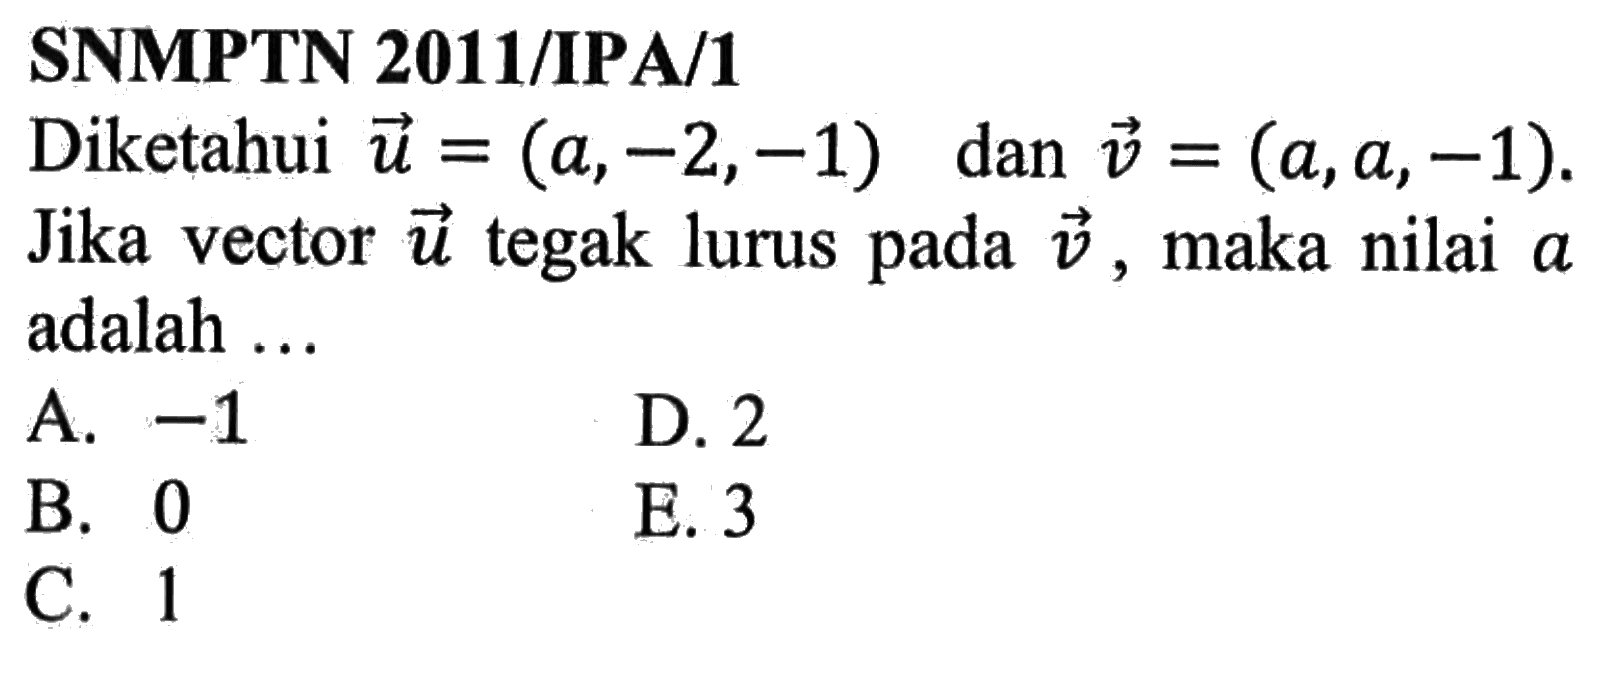 SNMPTN 2011/IPA/1 Diketahui vektor u=(a,-2,-1) dan vektor v=(a,a,-1). Jika vektor u tegak lurus pada vektor v, maka nilai a adalah ...